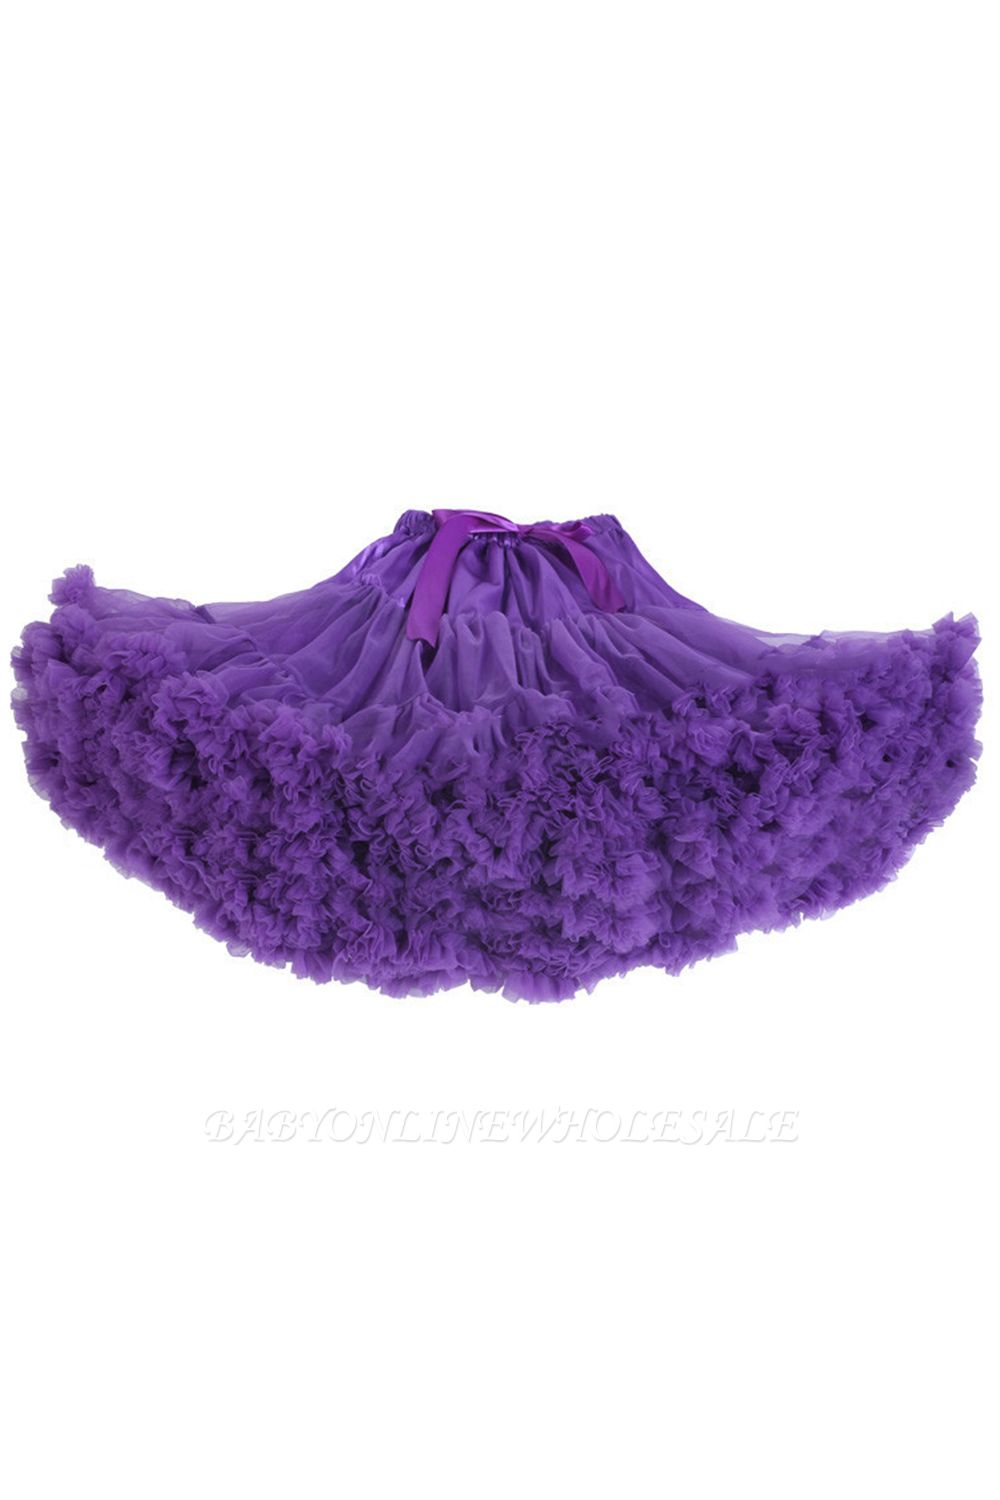 Marvelous Tulle Mini A-line Skirts | Elastic Bowknot Women's Skirts